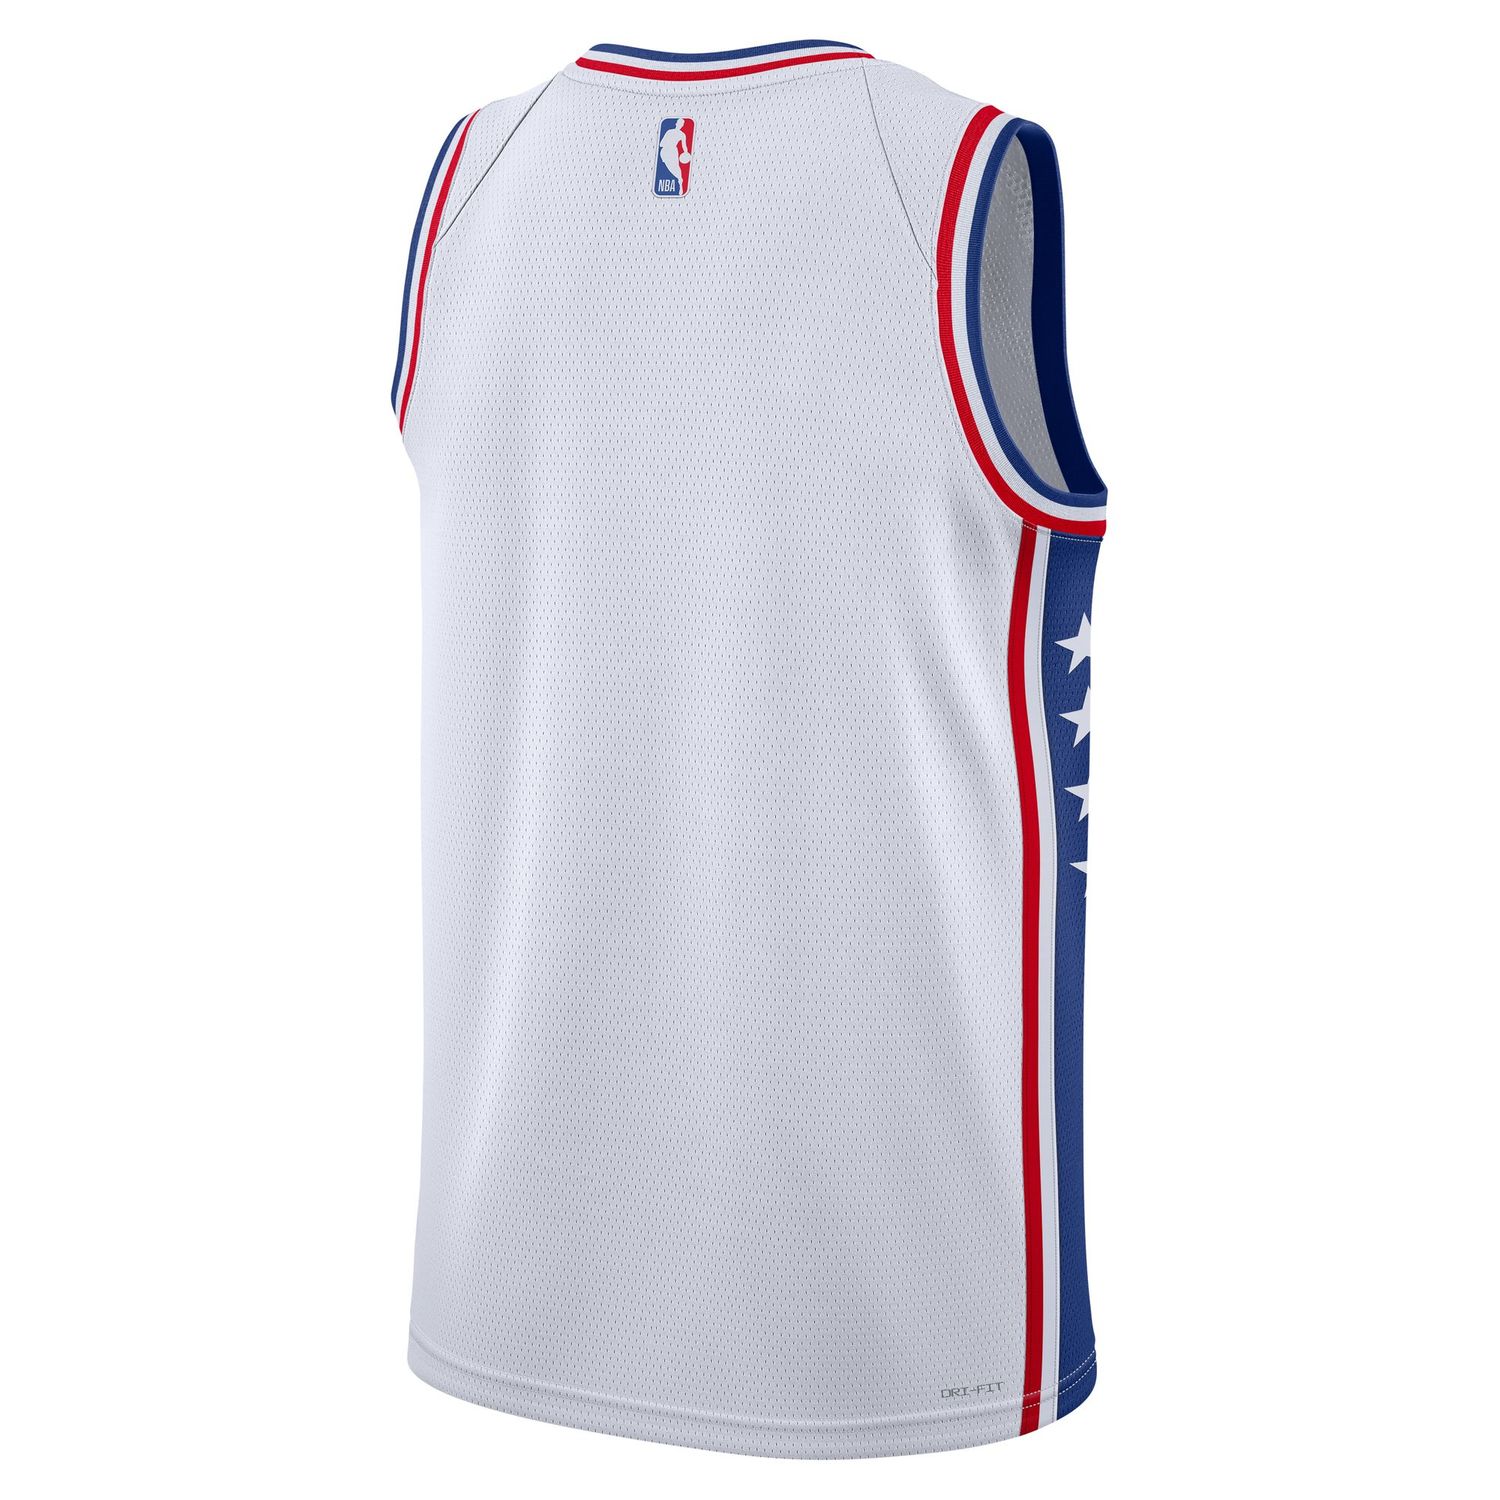 Nike NBA Philadelphia 76ers Association Edition Swingman Jersey